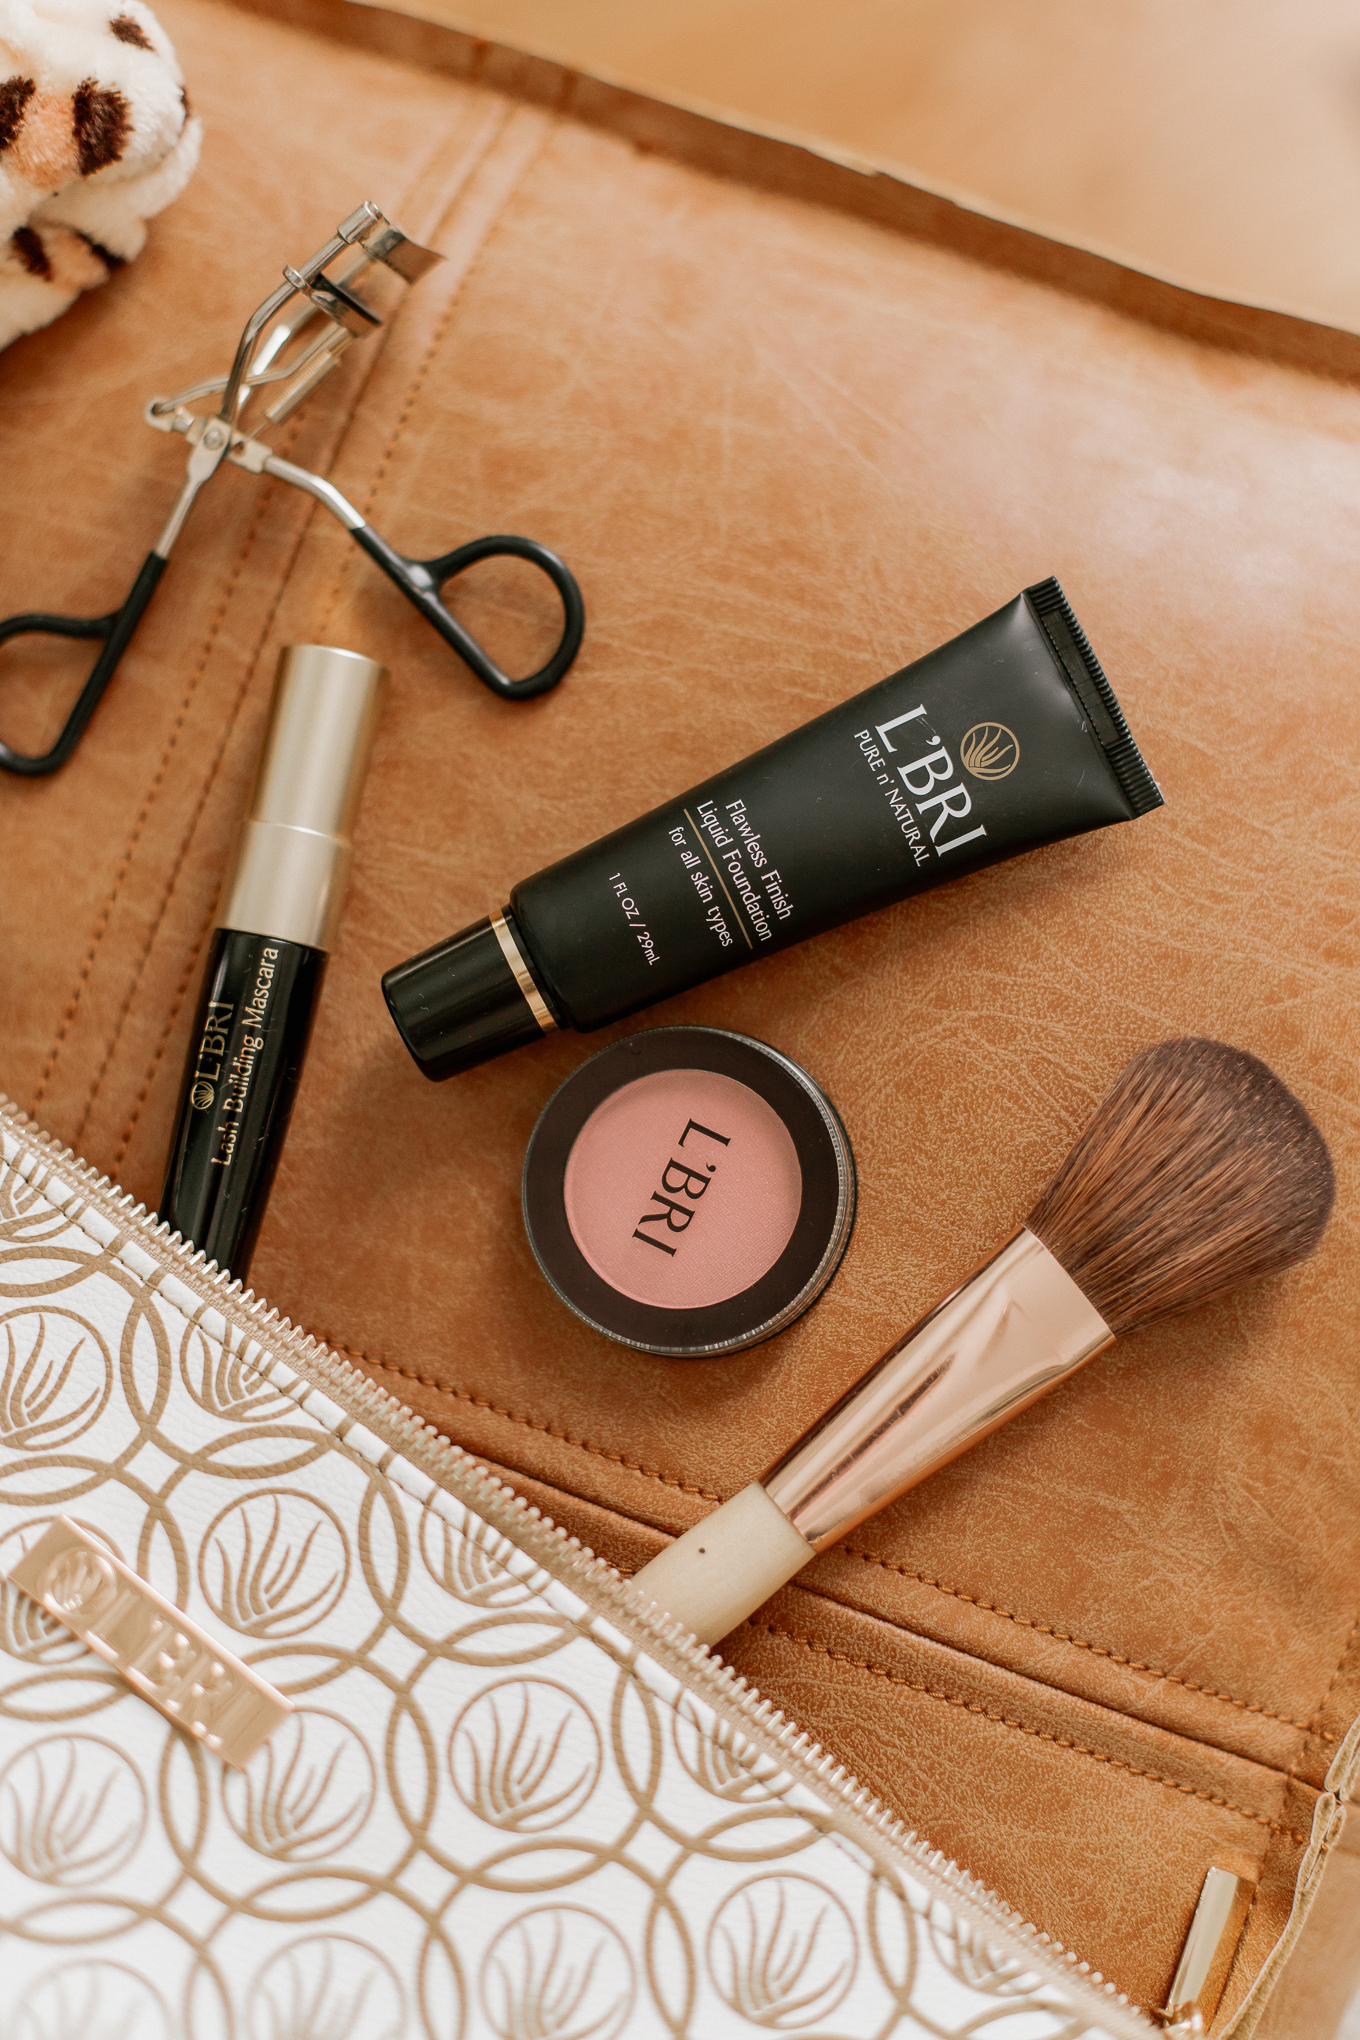 Budget-Friendly Makeup Favorites | L'BRI Pure N' Natural | Louella Reese #cleanbeauty #makeup #budgetfriendlybeauty